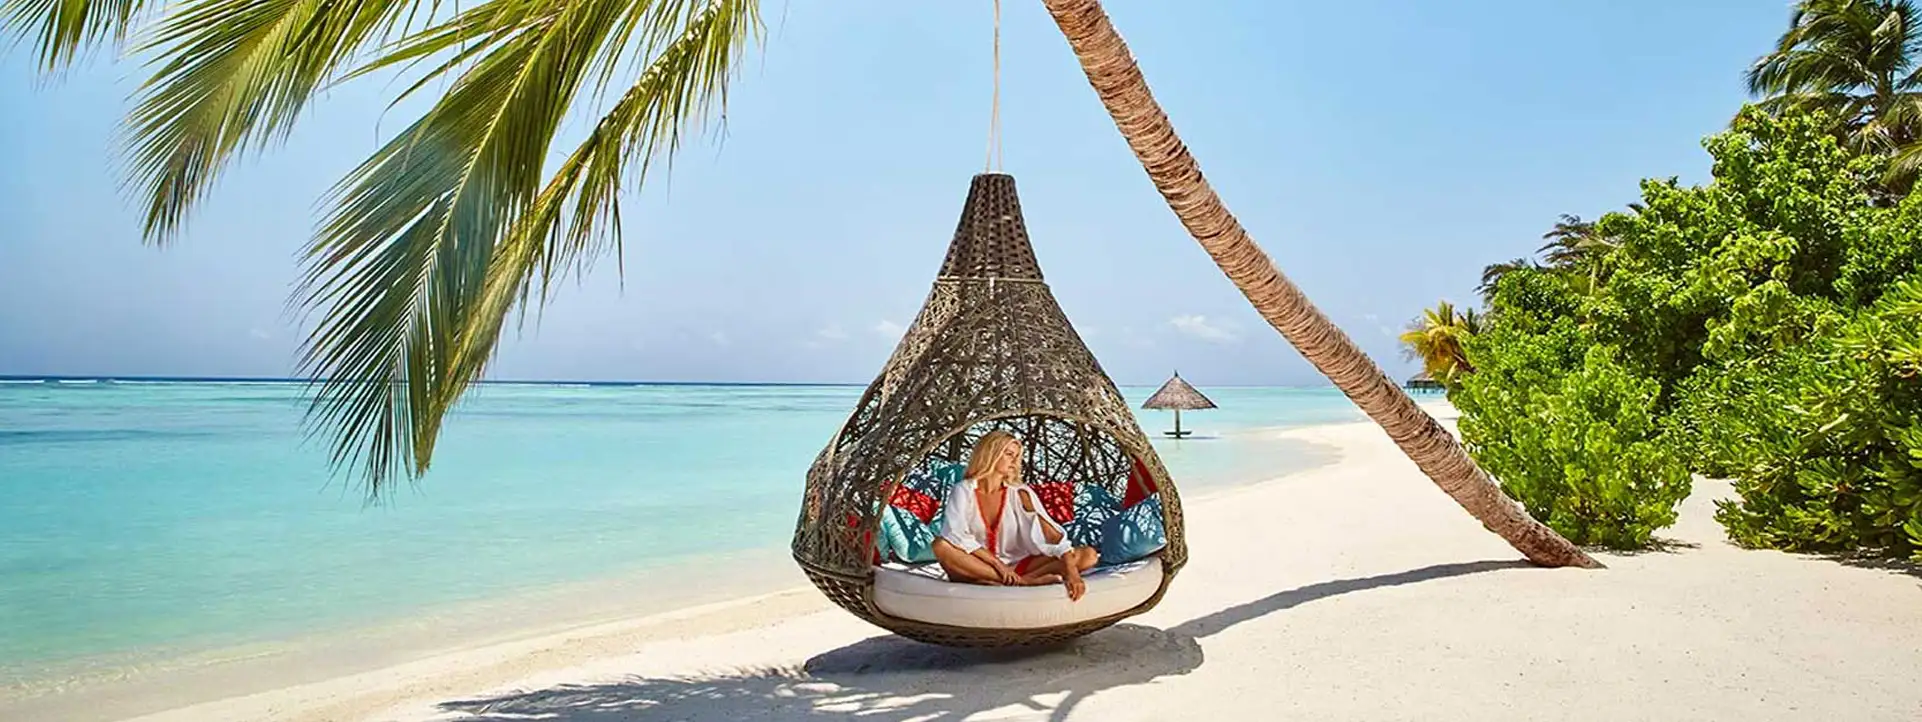 LUX-SOUTH-ARI-ATOLL-Maldives-girl-in-hammock-on-beach